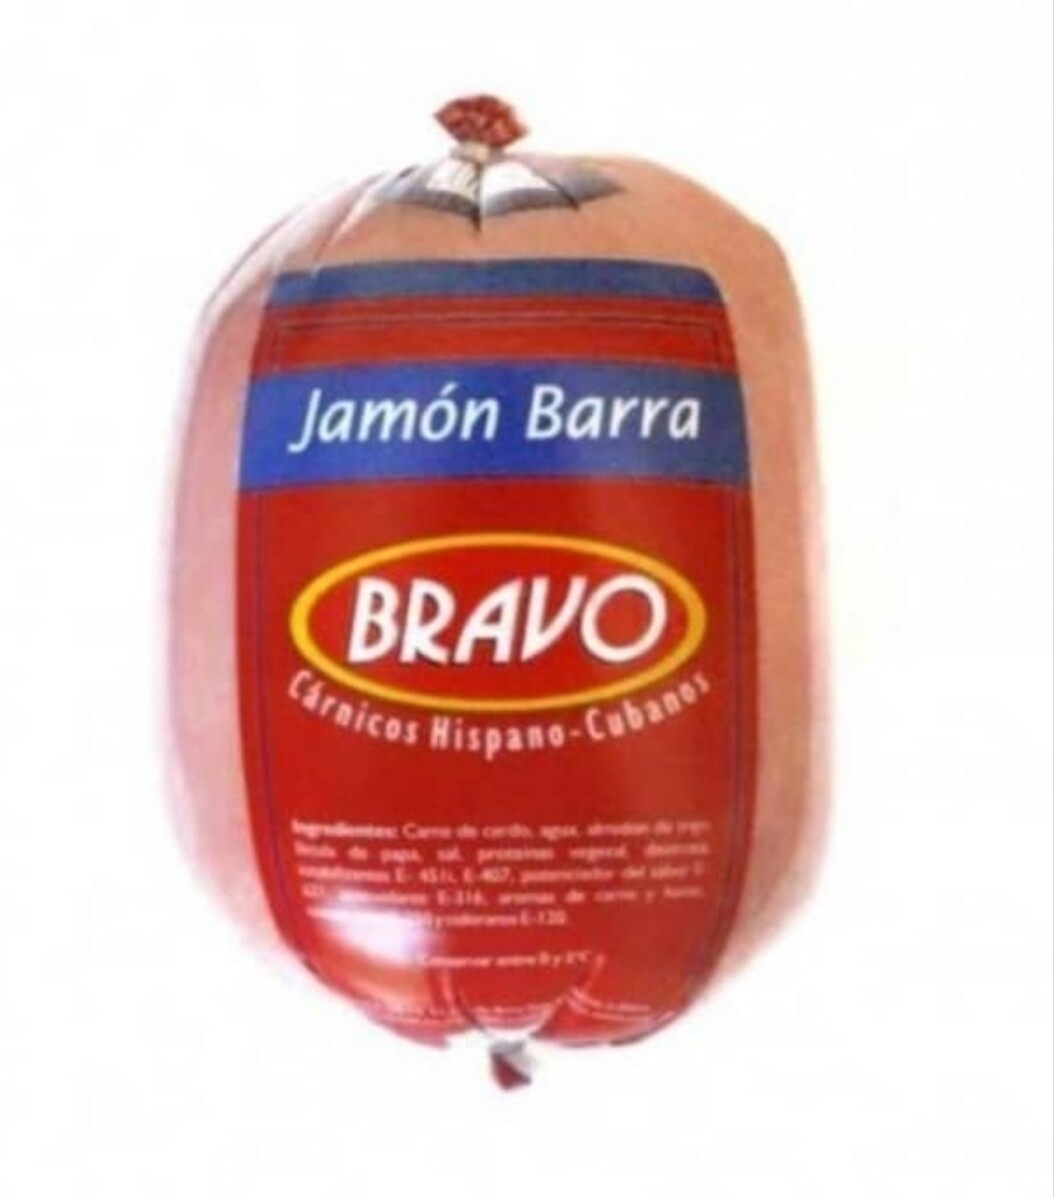 MY- Jamón barra BRAVO (2 kg / 4,4 lb)